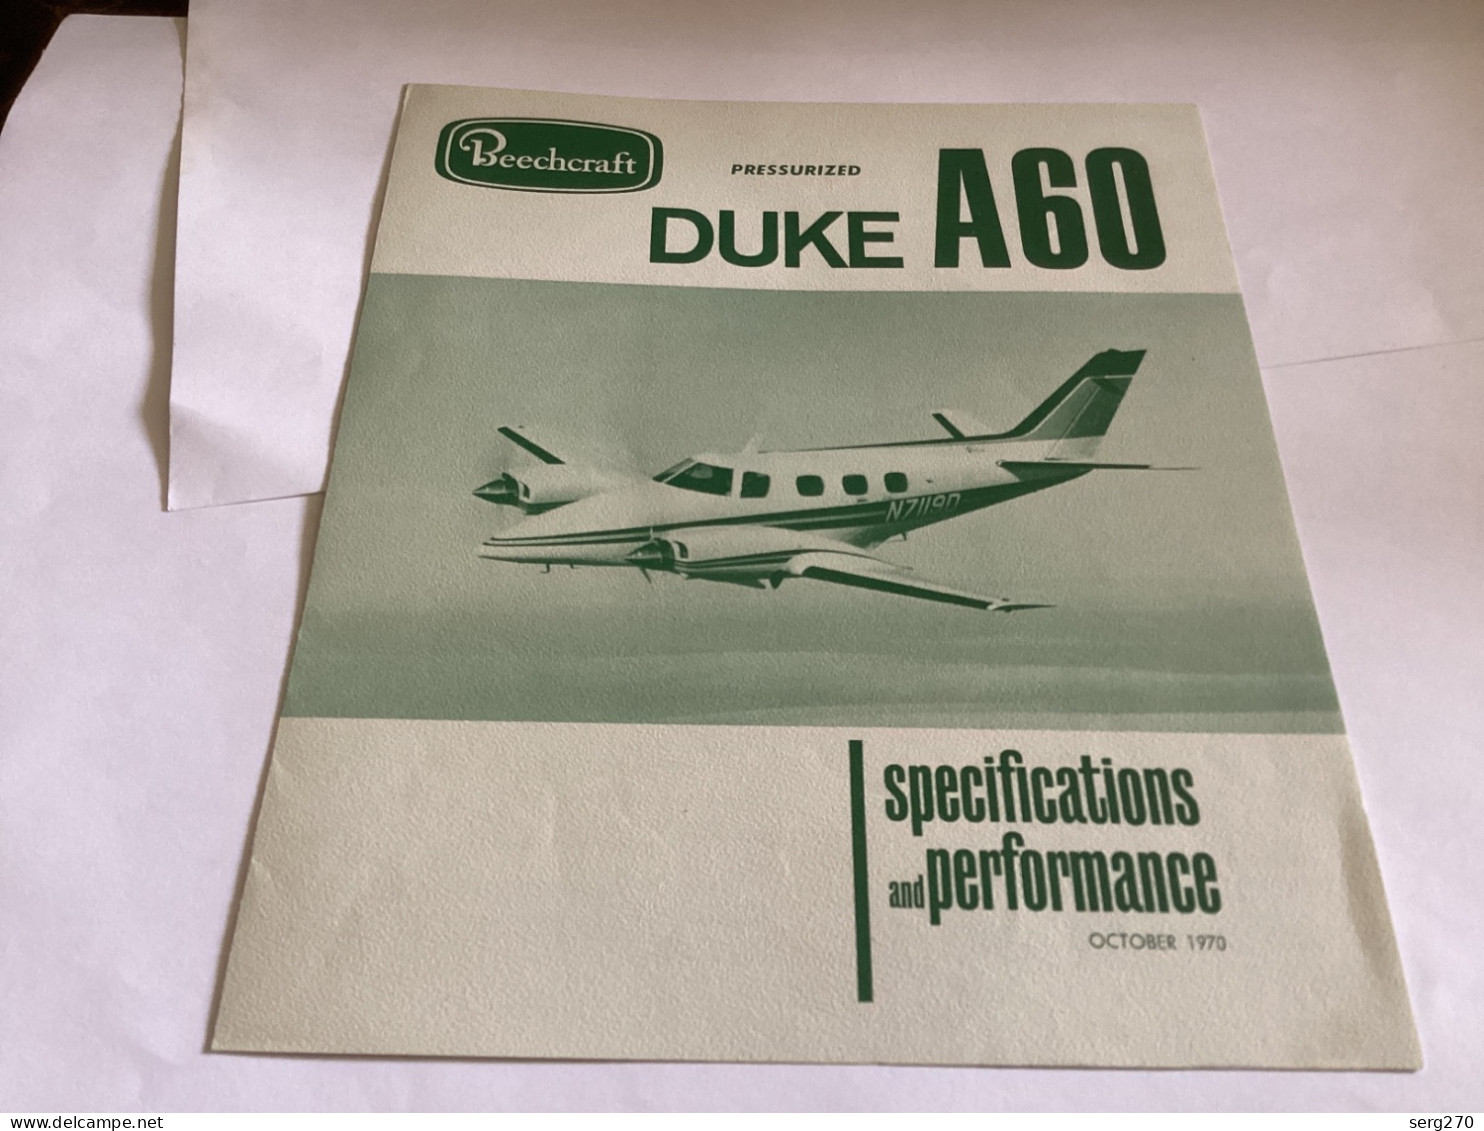 Avion Aviation Beecheraft PRESSURIZIO DUKE AGI 1970 Specifications And Performance OCTOBER 1970 - Verkehr